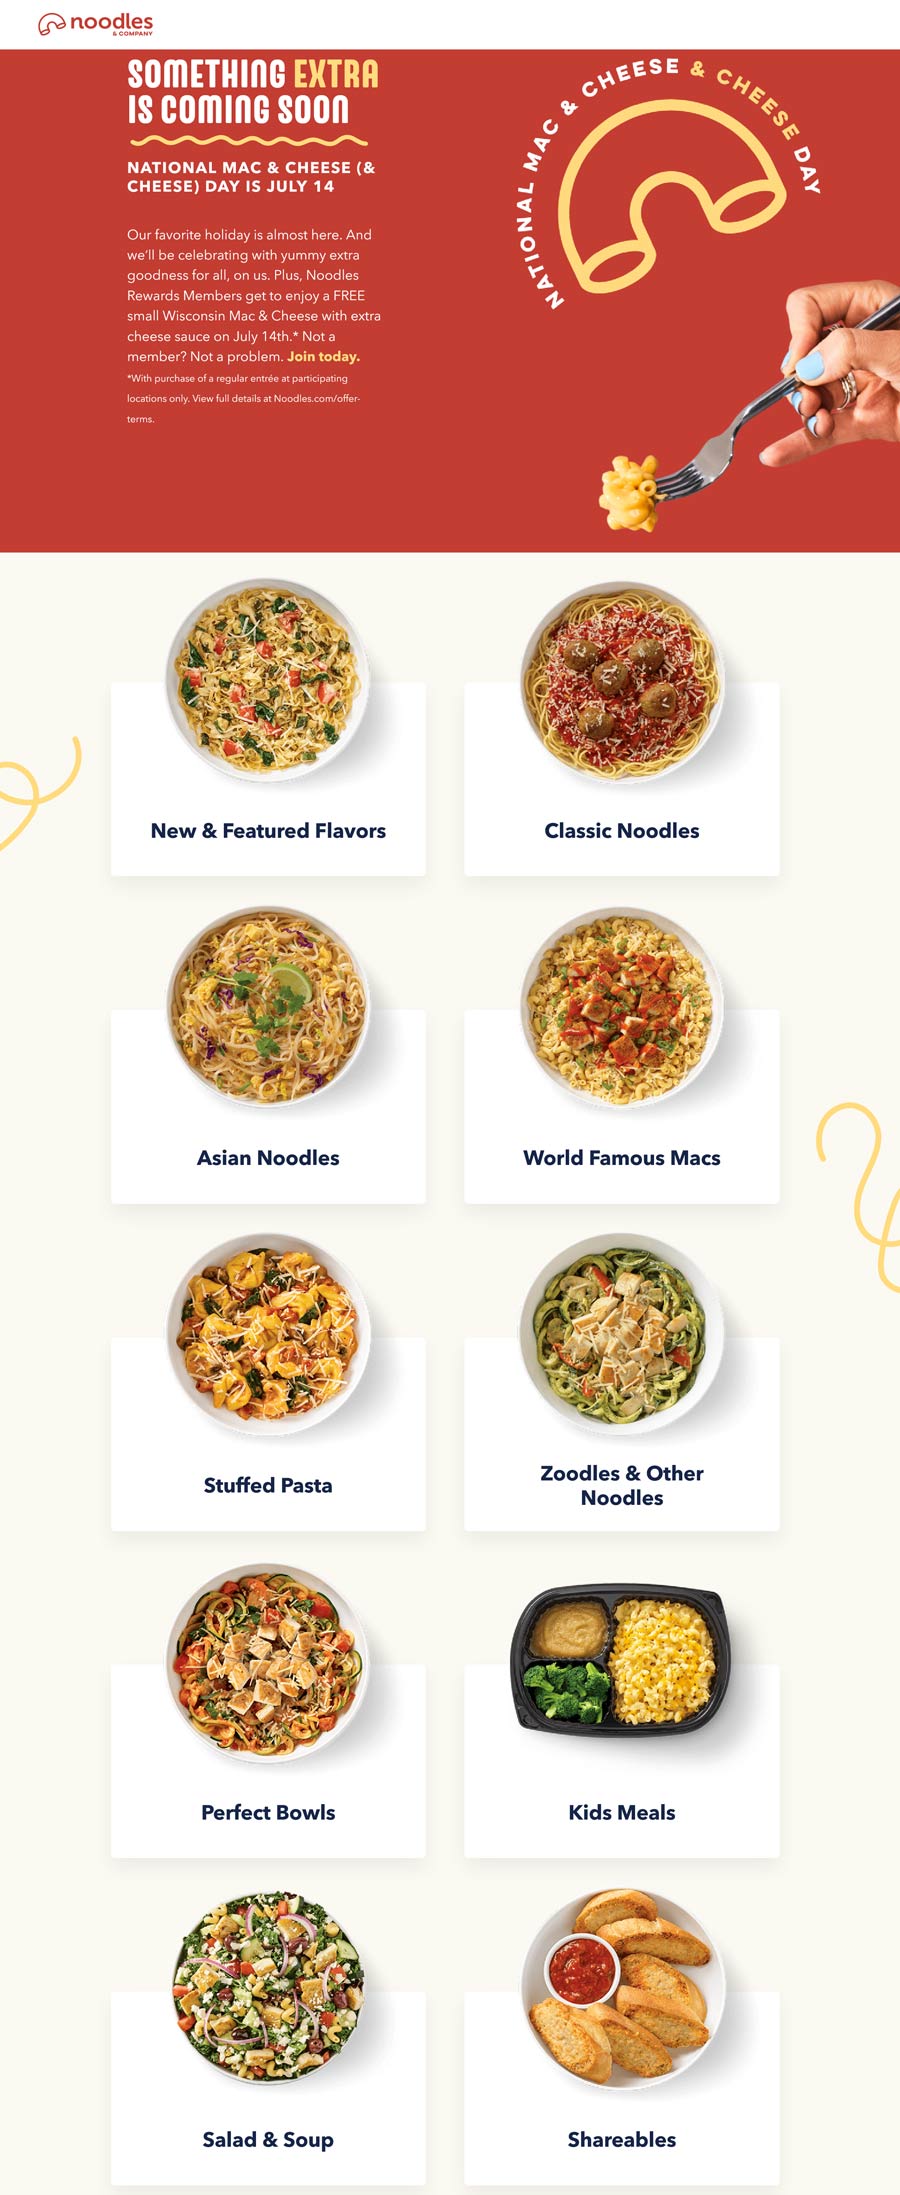 Noodles & Company restaurants Coupon  Free mac & cheese entree via login Wednesday at Noodles & Company #noodlescompany 